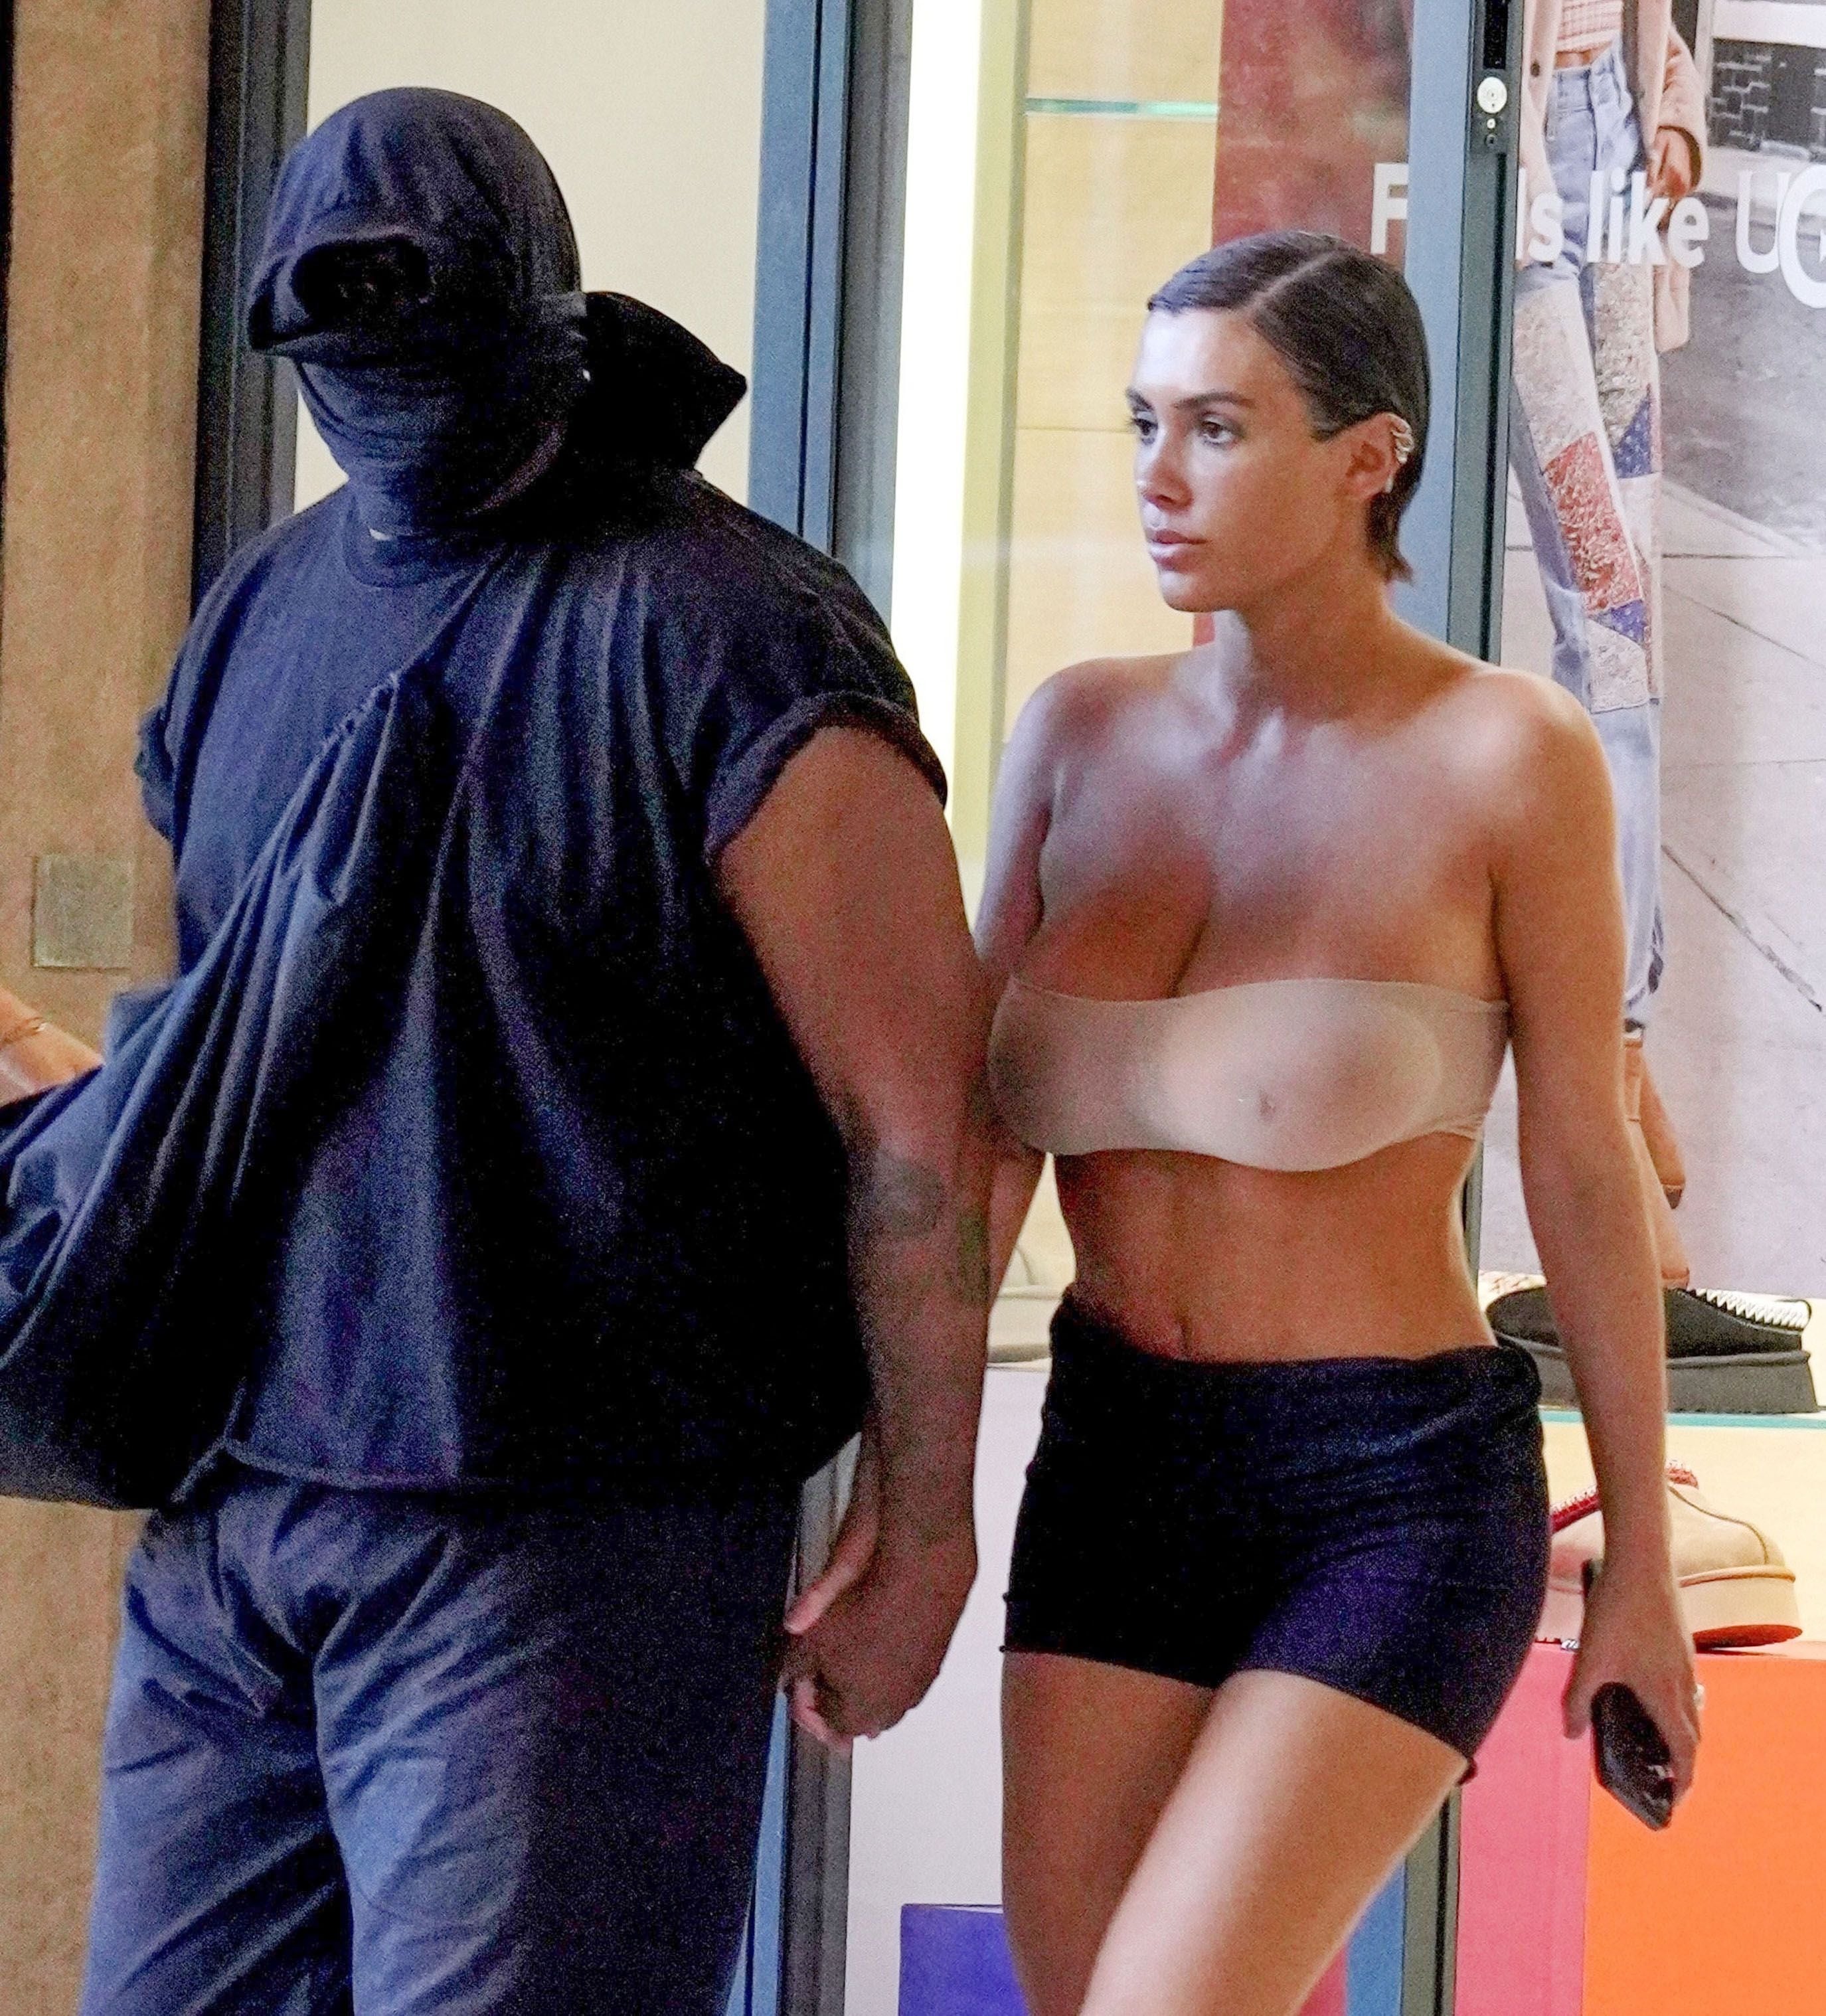 Kanye West y su actual esposa Bianca Censori de paseo en Italia, donde causaron polémica. © 2023 Backgrid UK/The Grosby Group